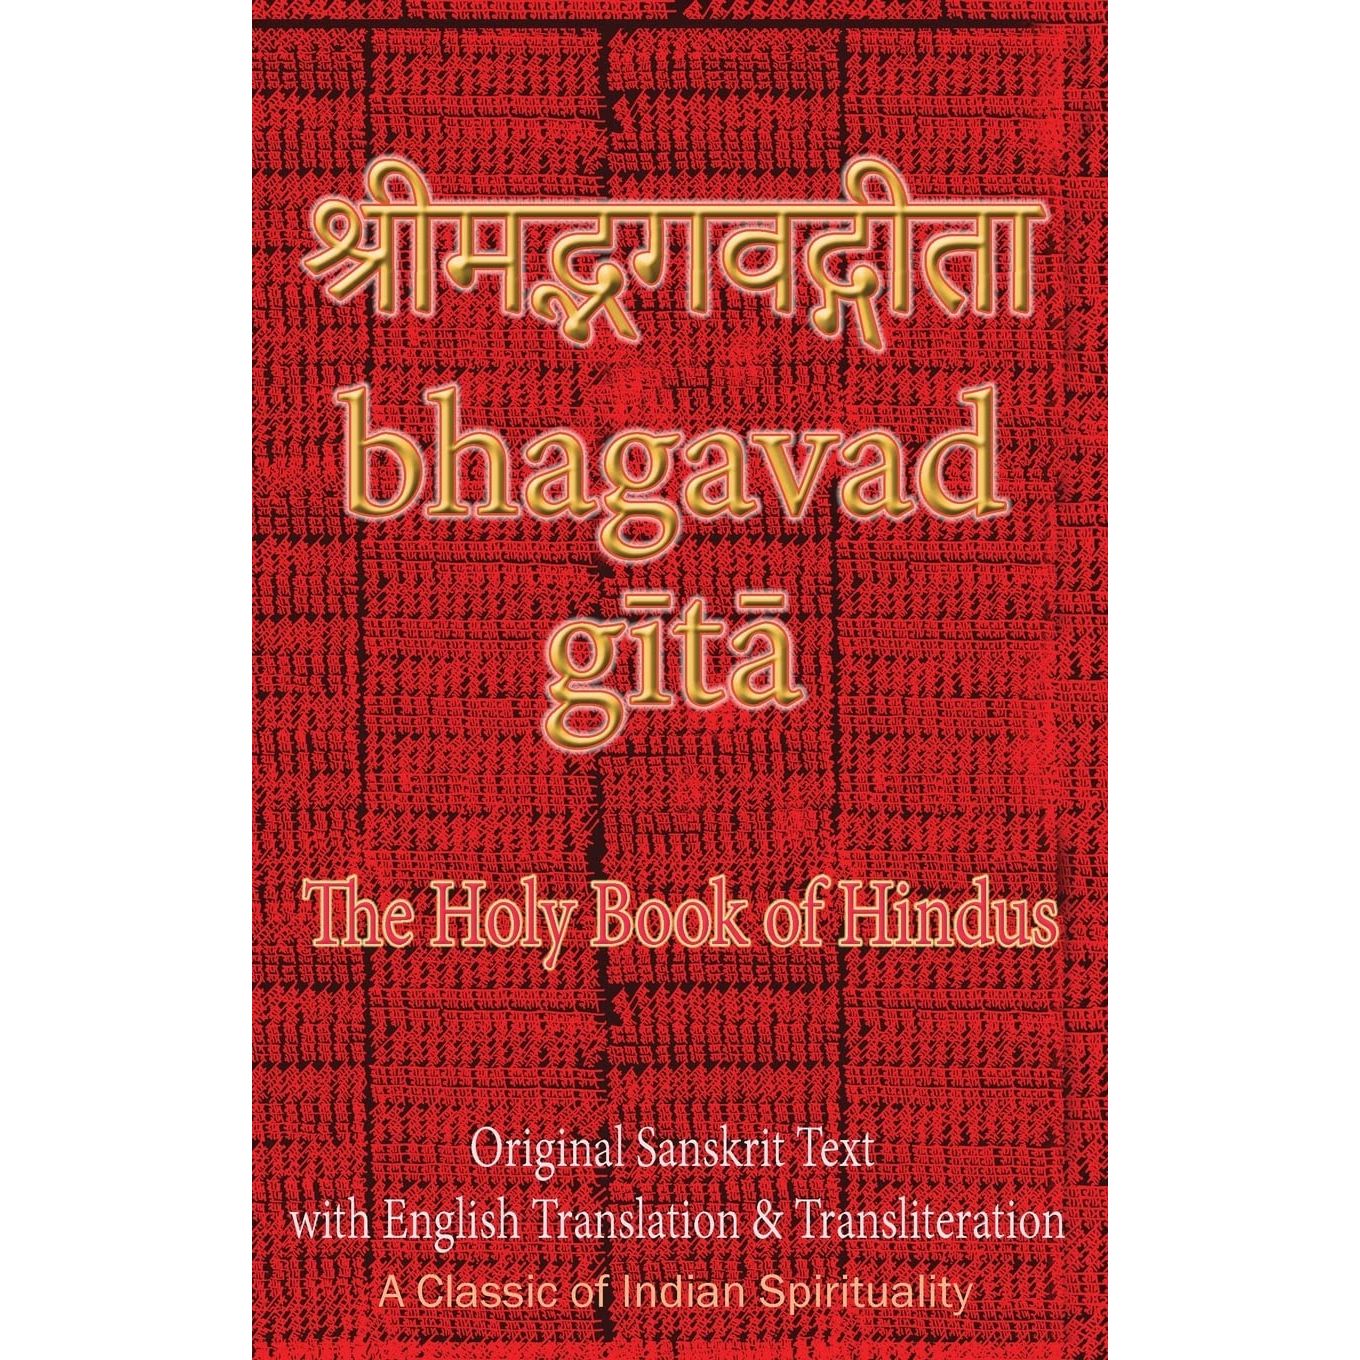 Bhagavad Gita, The Holy Book of Hindus: Original Sanskrit Text with English Translation